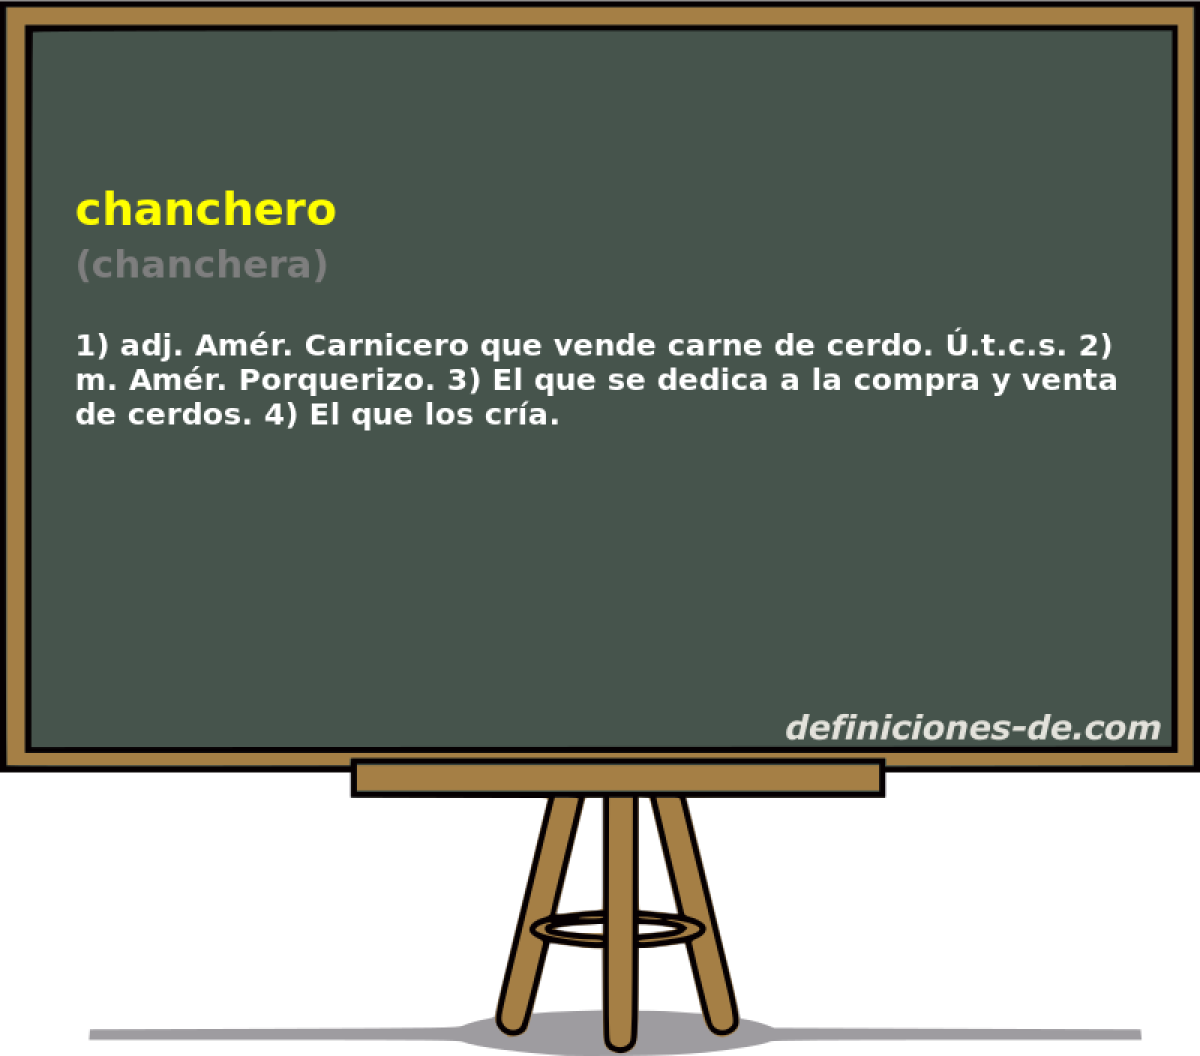 chanchero (chanchera)